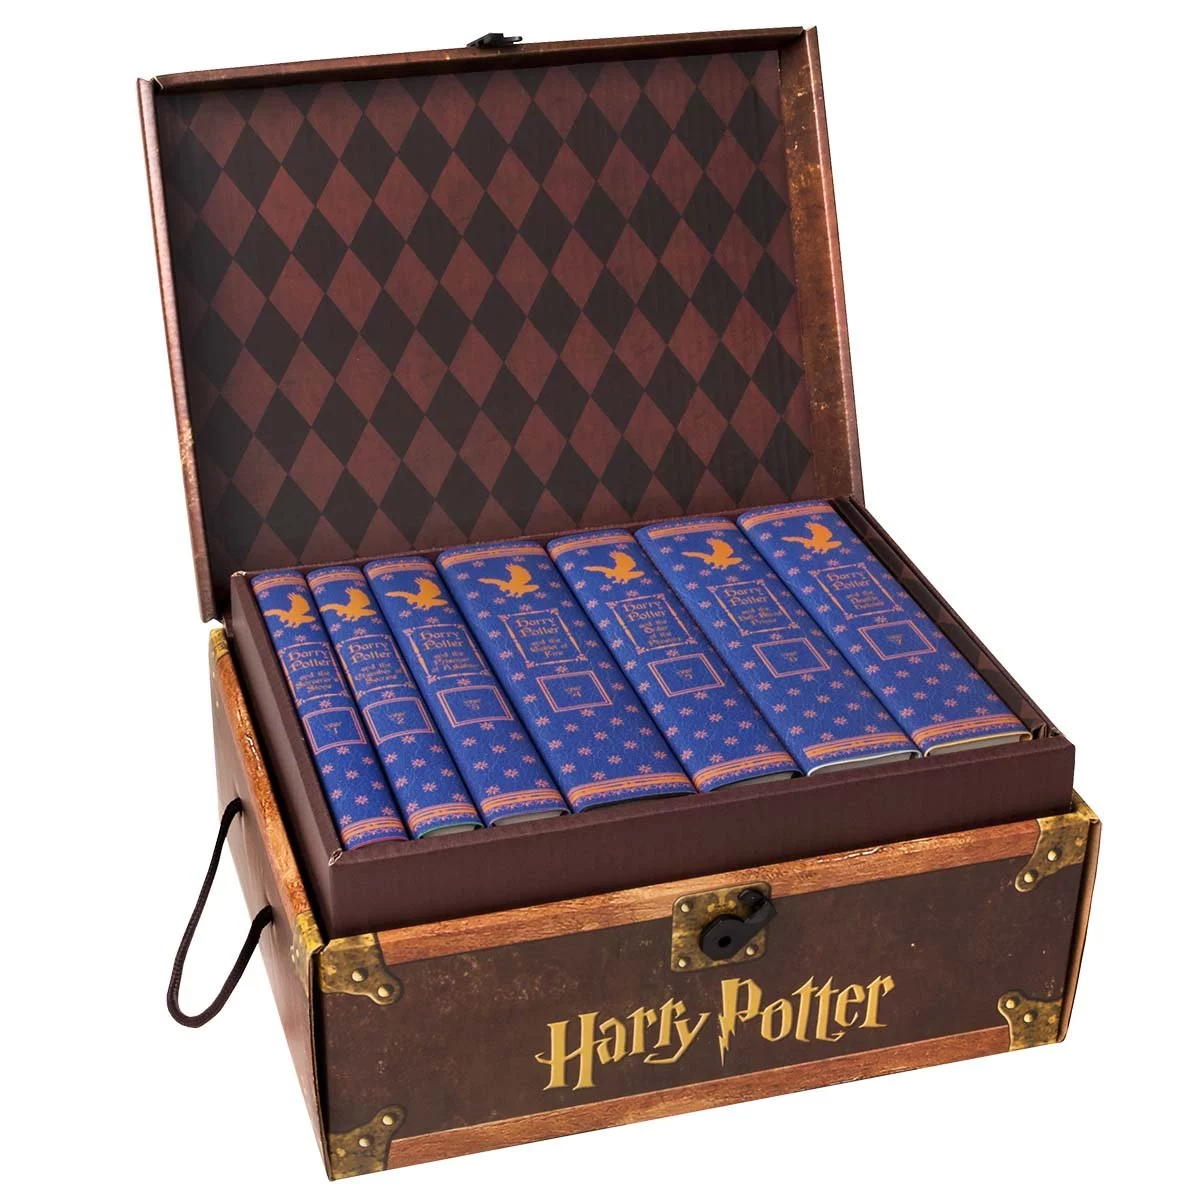 Best Nerd Gifts 2022: Harry Potter Duster Book Set for Geek 2022